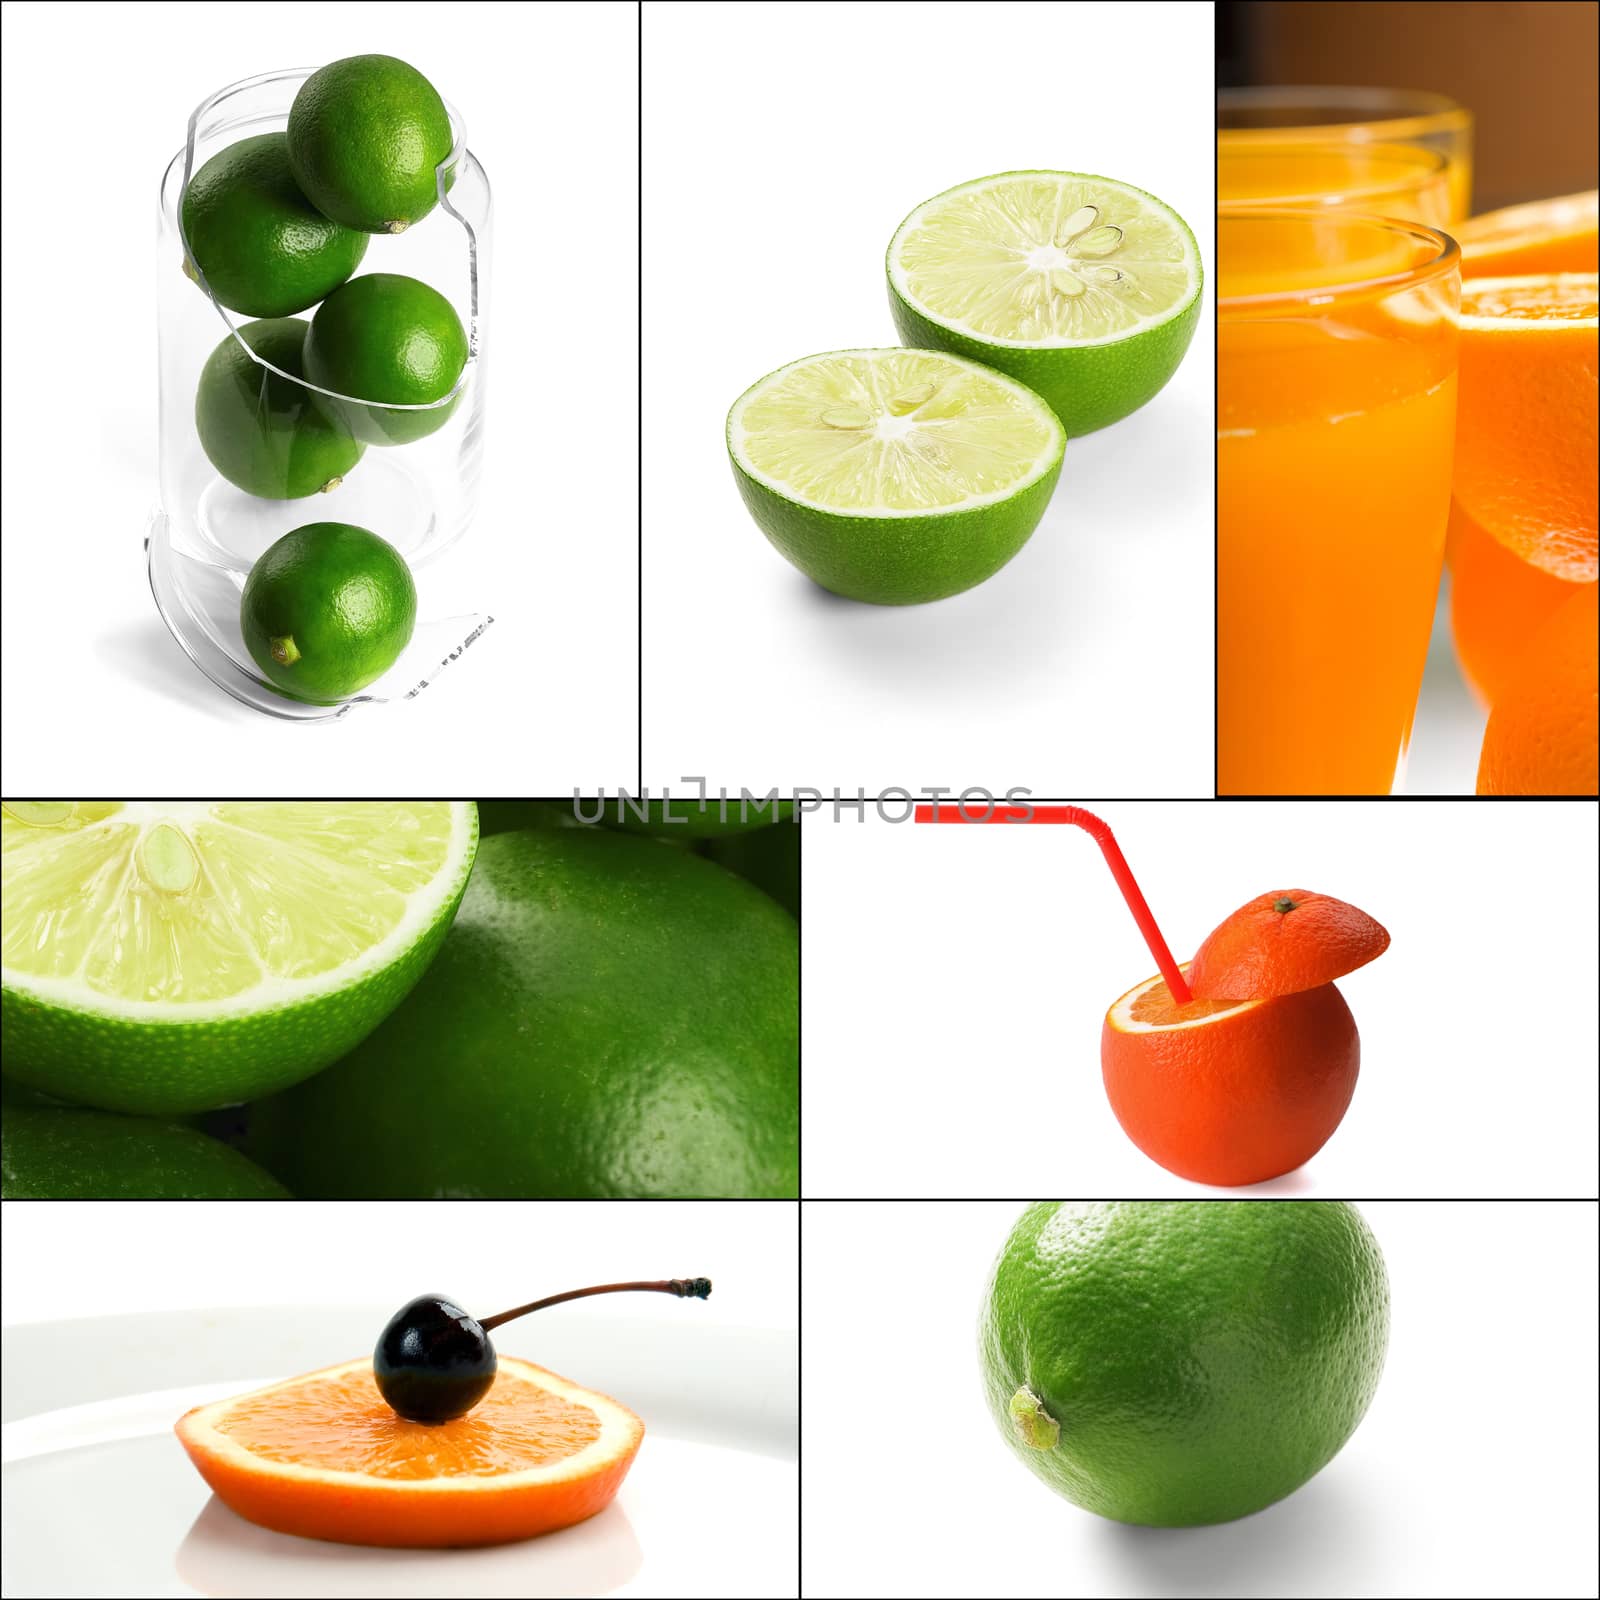 citrus fruits collage by keko64